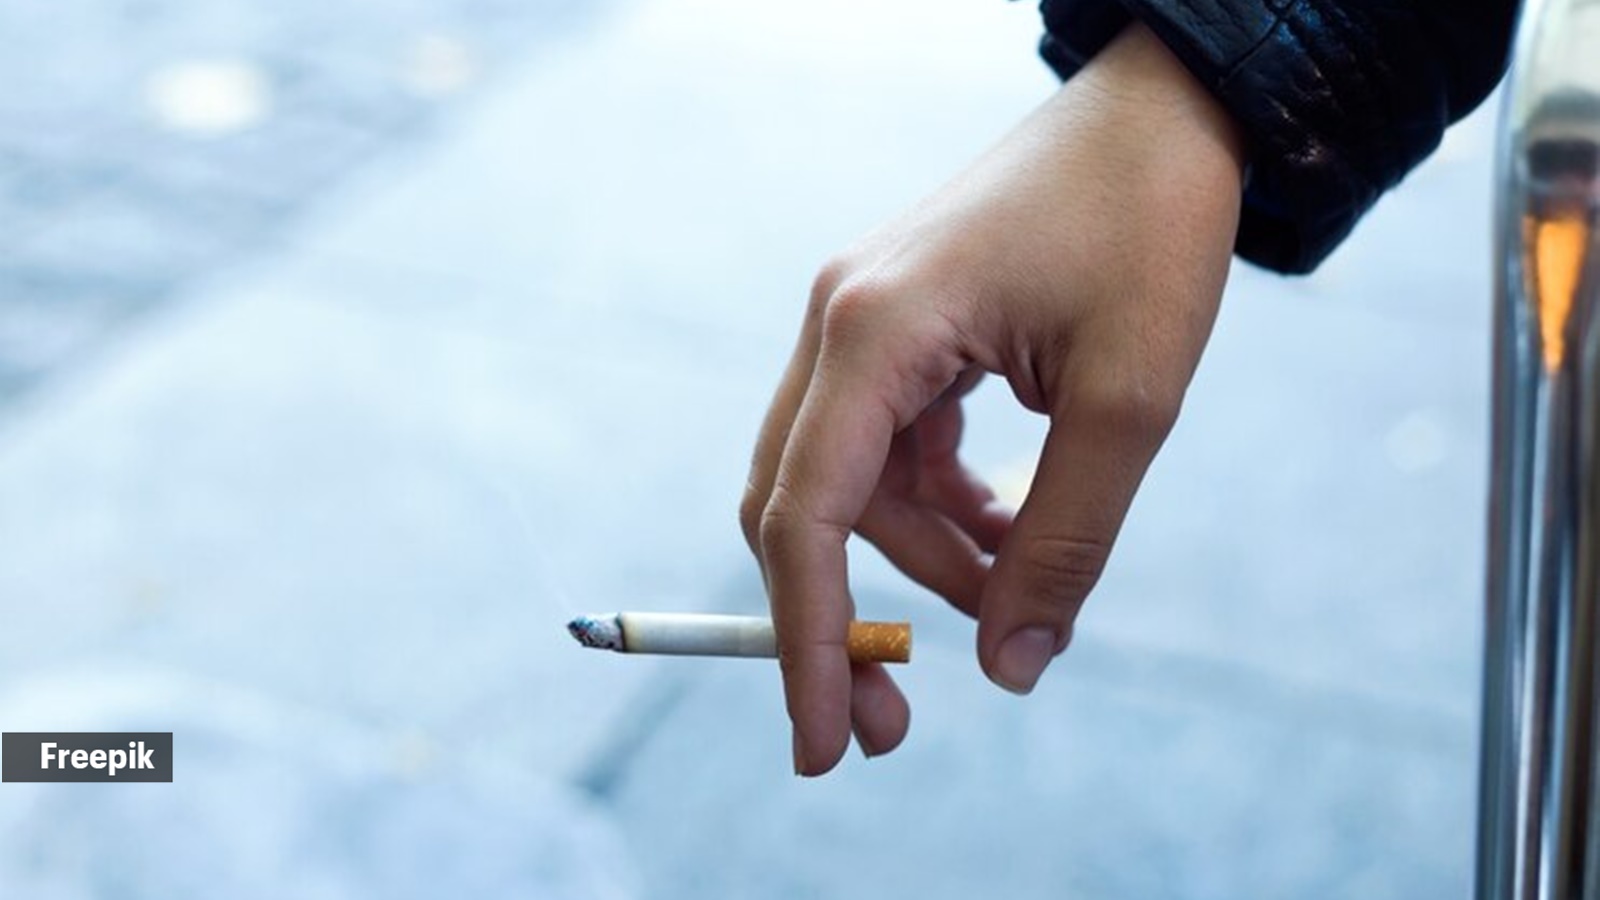 smoking, cigarettes. teenagers, tobacco